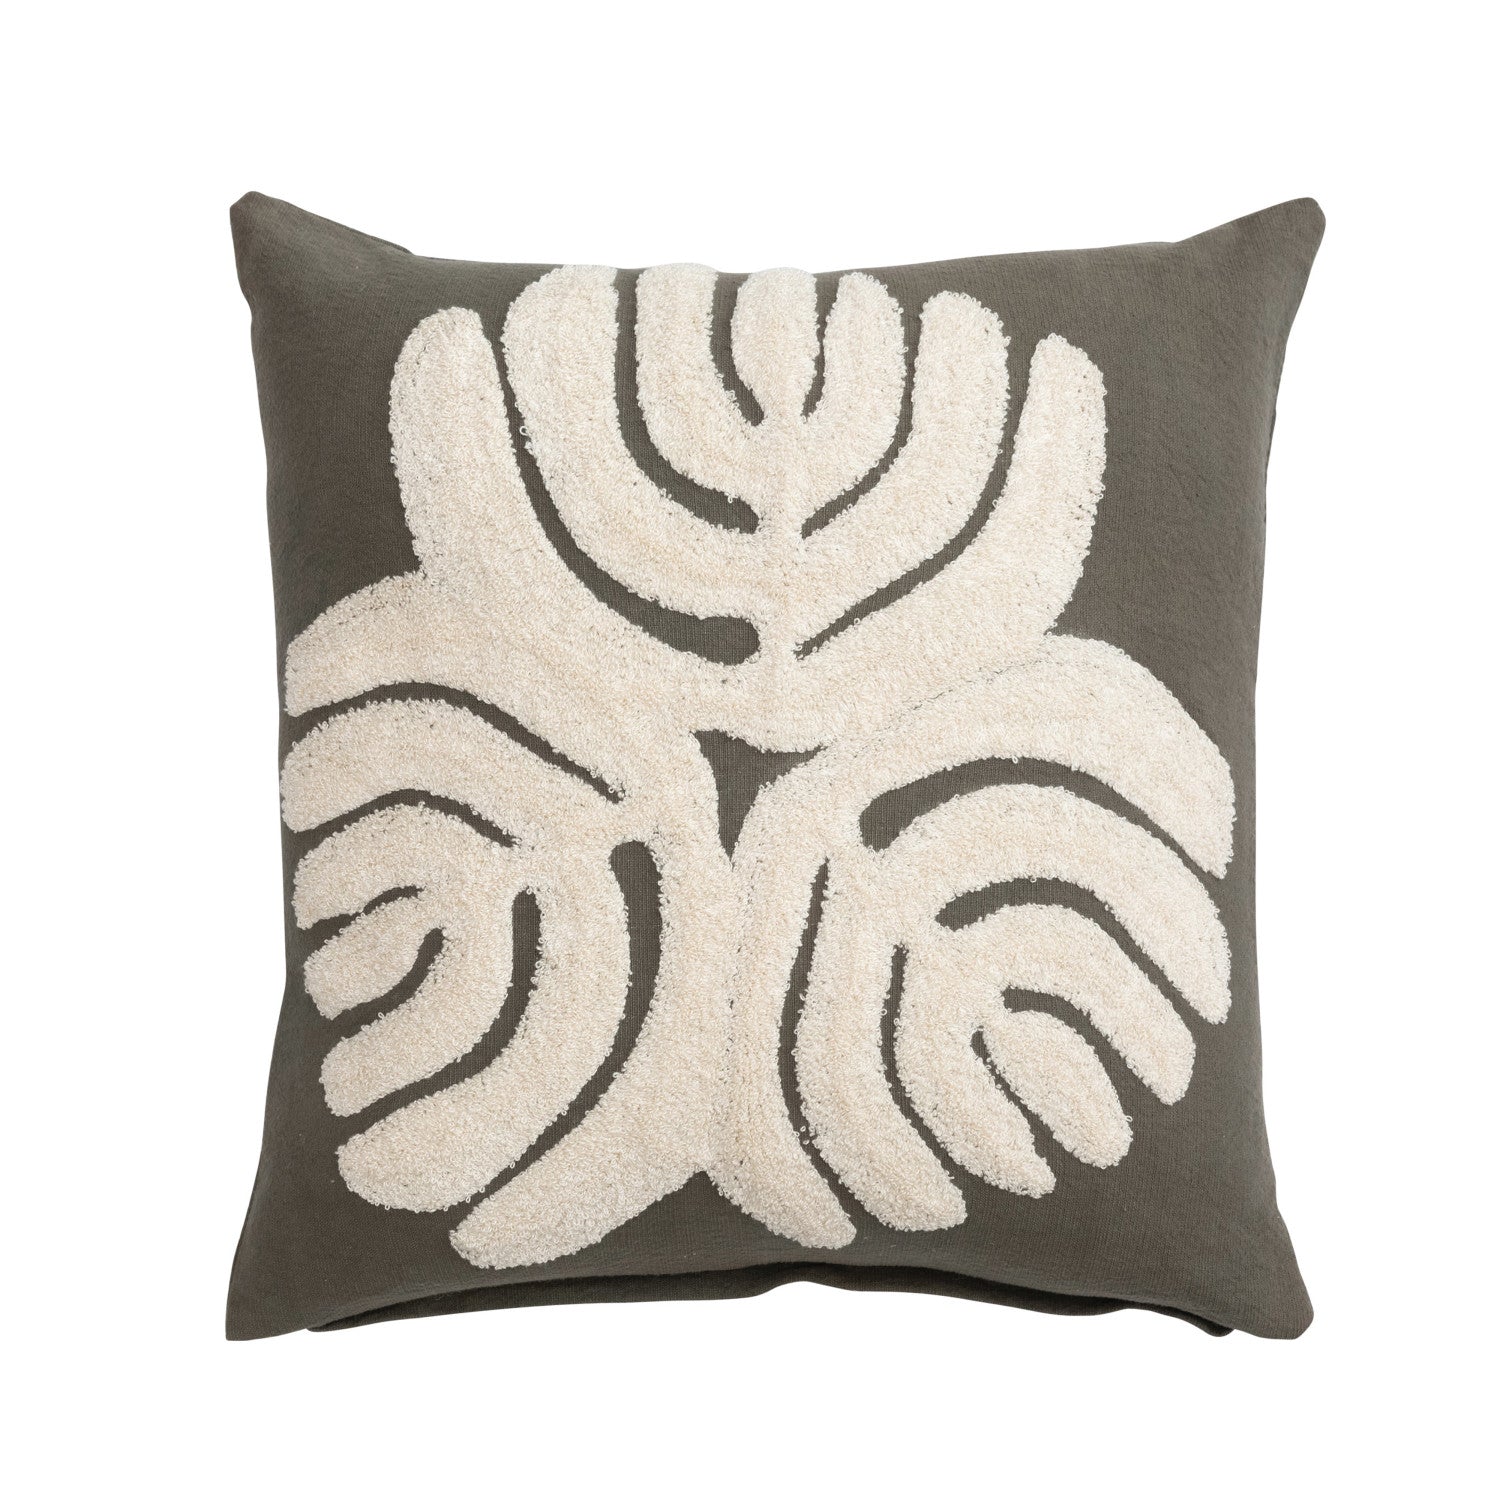 Cotton Slub Pillow w/Embroidery, Down Fill